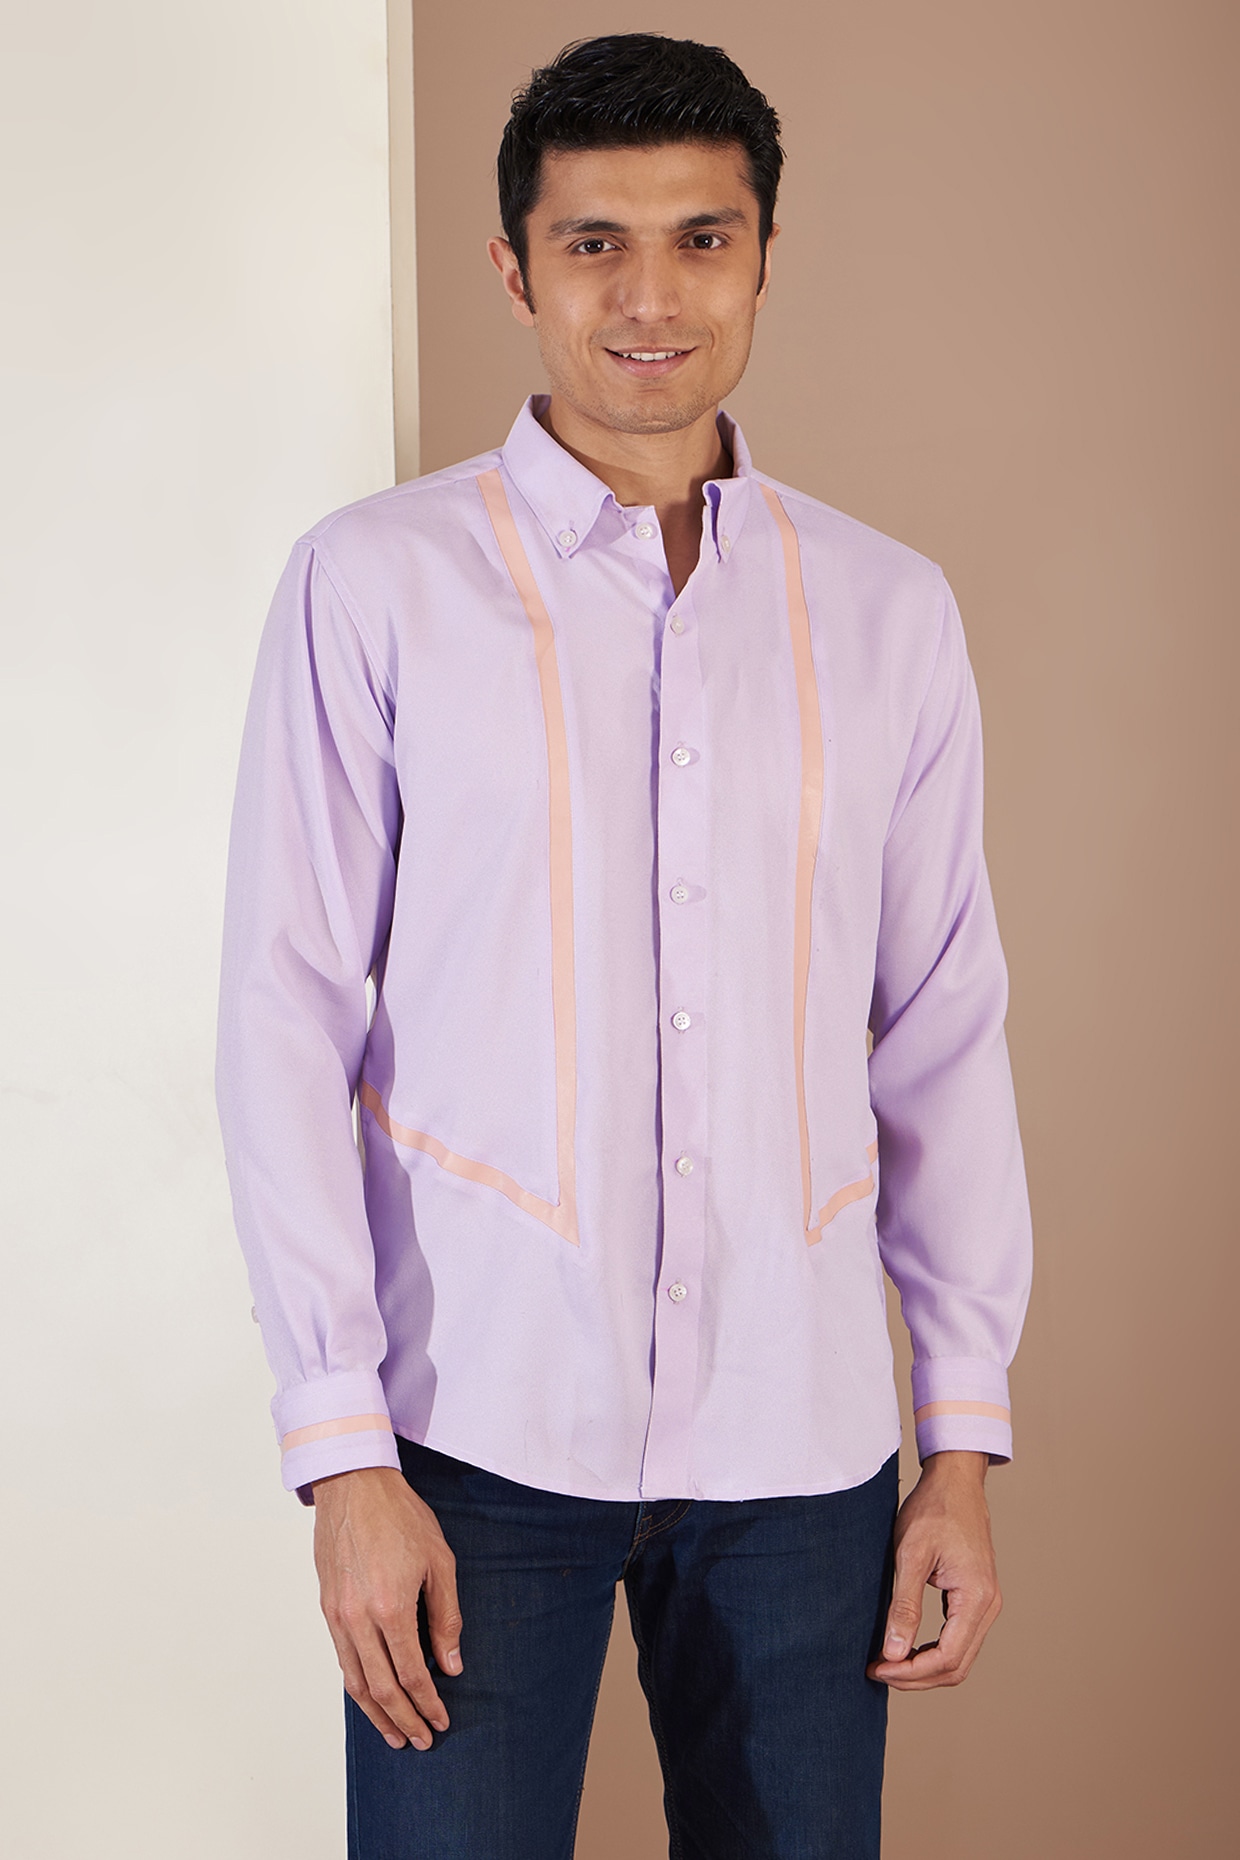 6 Tips for Matching Pants With a Dress Shirt | Men fashion casual shirts, Purple  shirt outfits, Shirt outfit men